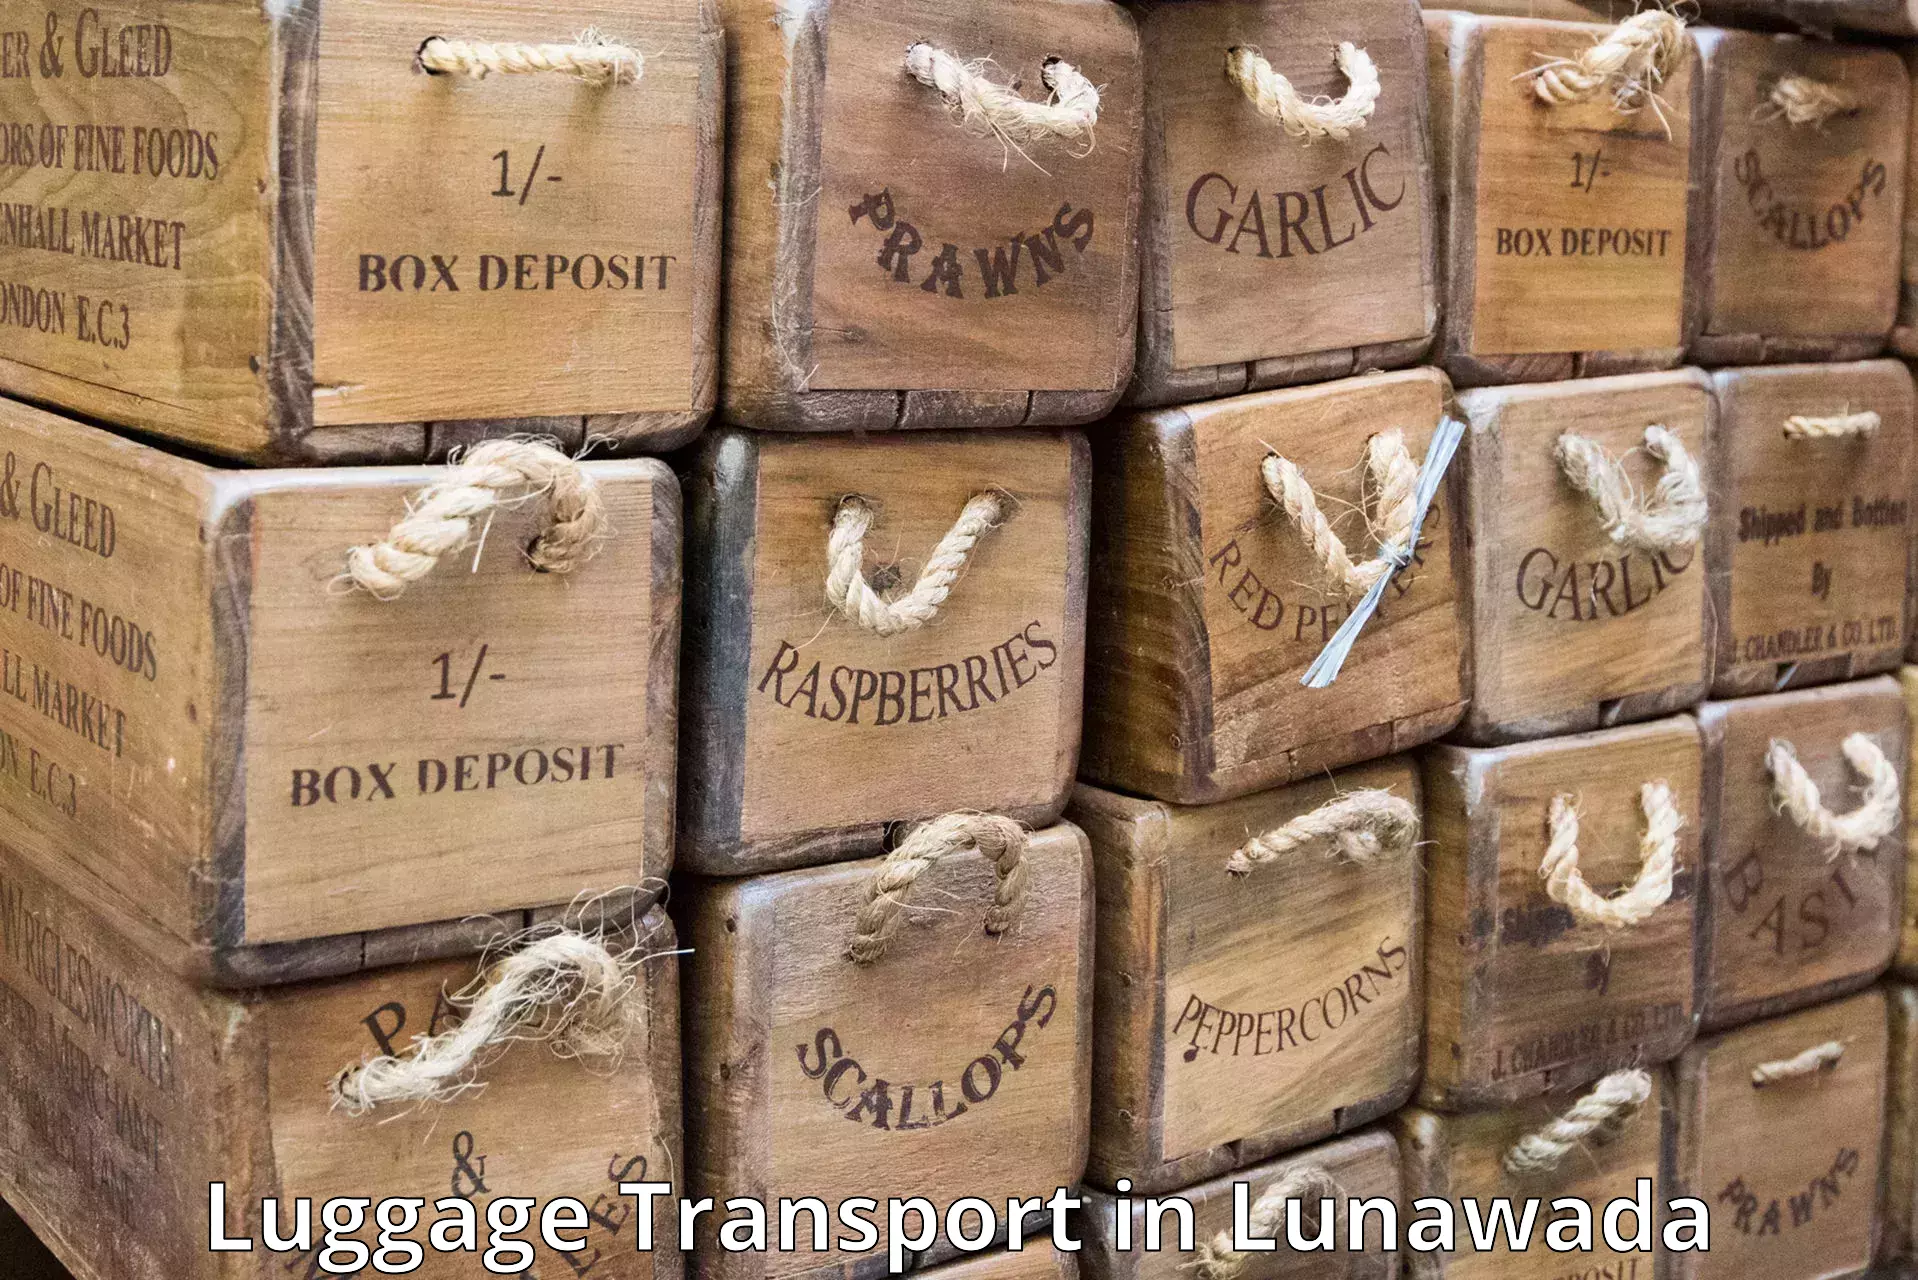 Luggage shipment specialists in Lunawada